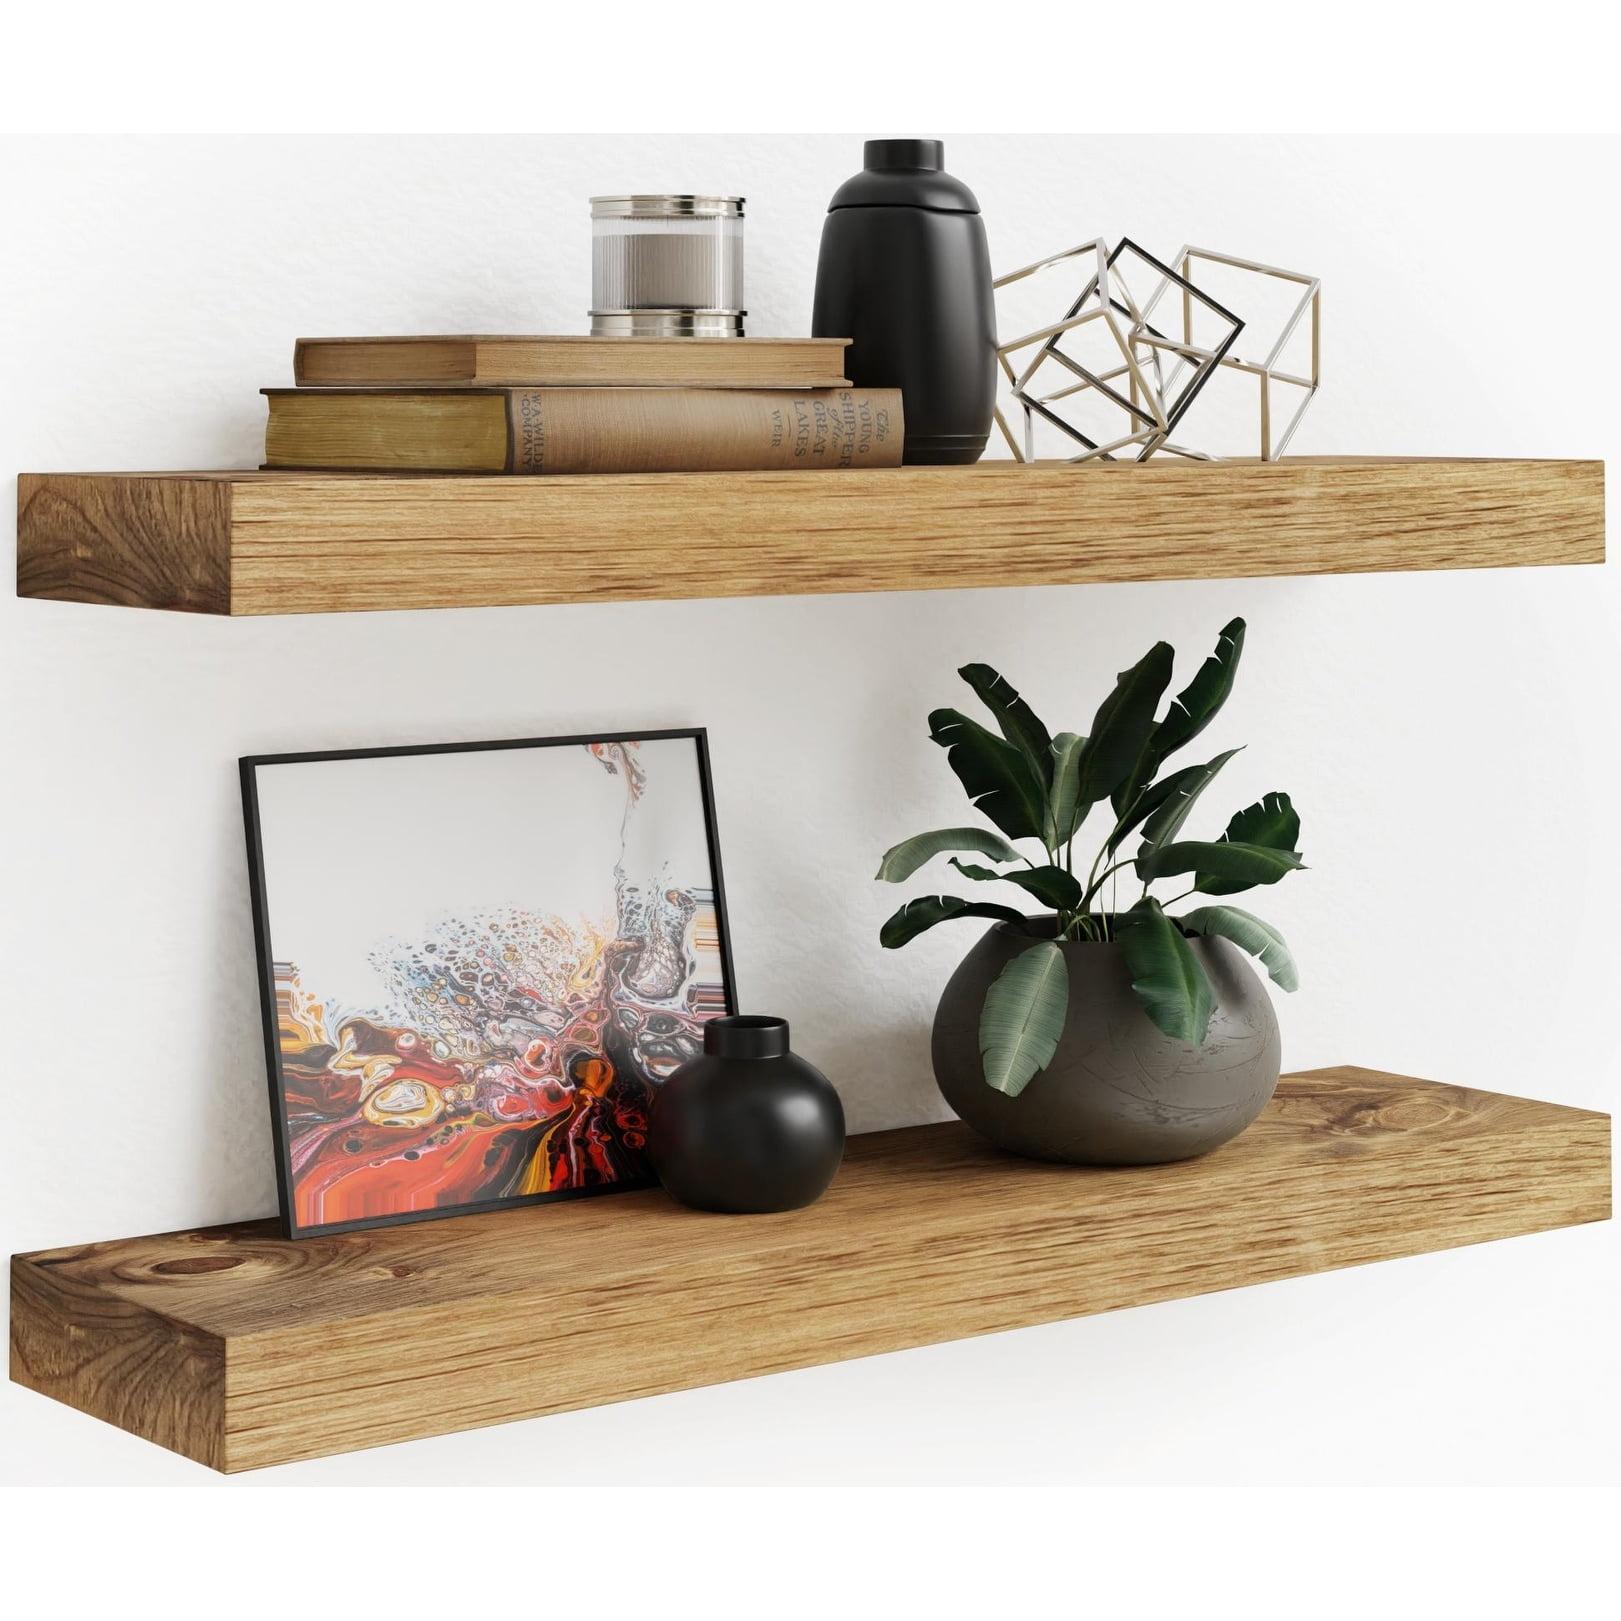 Special Walnut Rustic Wood Floating Wall Shelf - 24"x5.5"